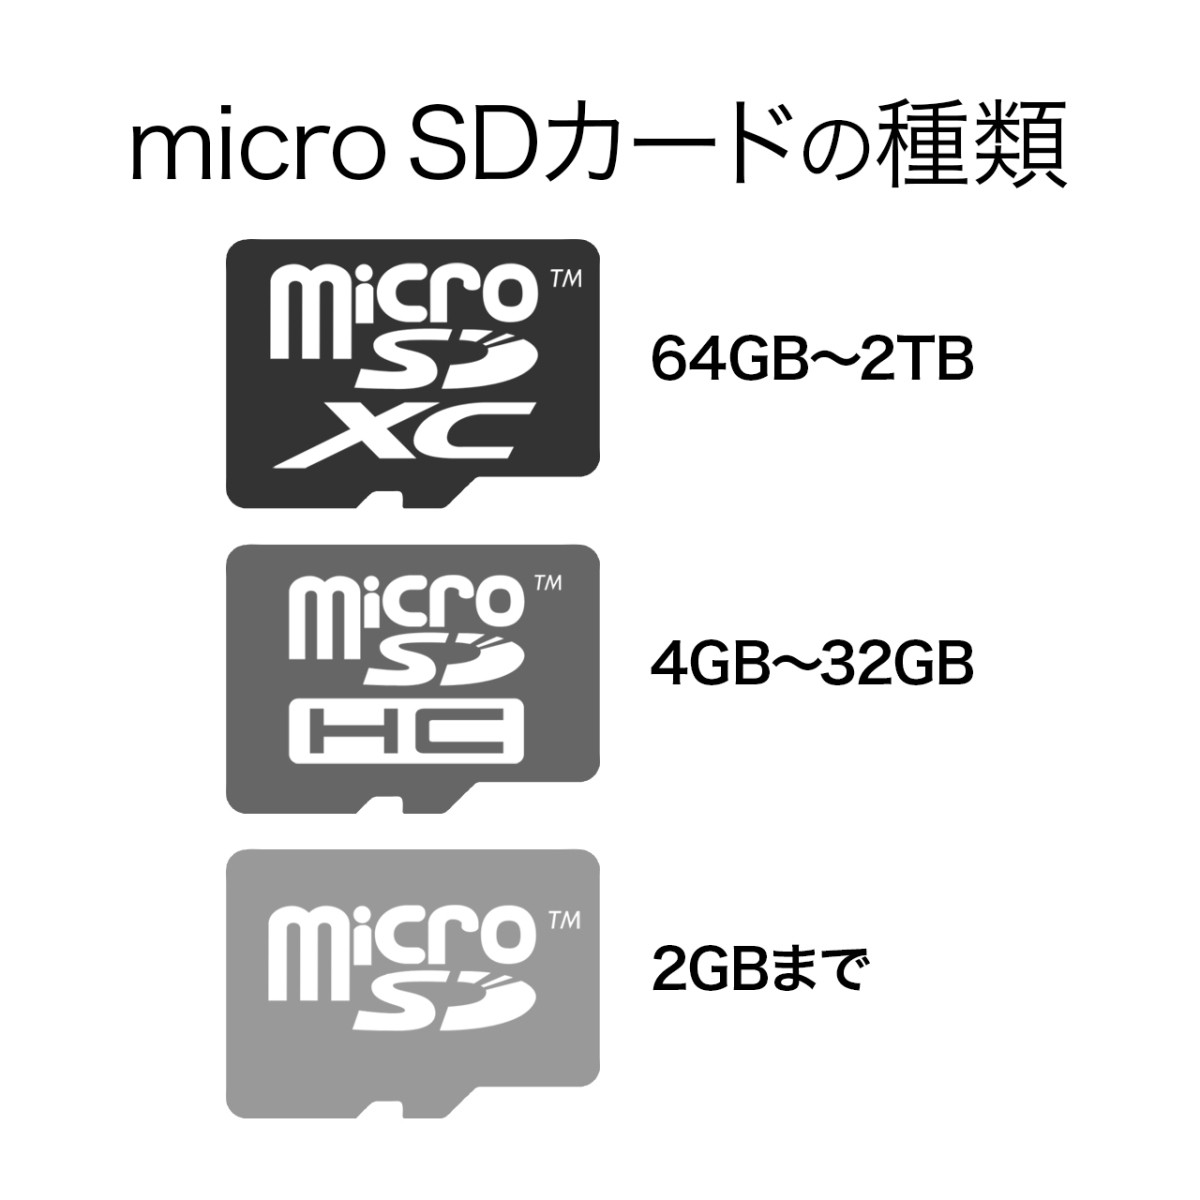 microSDXCカード 128GB マイクロSD  Class10 UHS-I U3 V30 SD変換アダプタ付き TS128GUSD300S-A